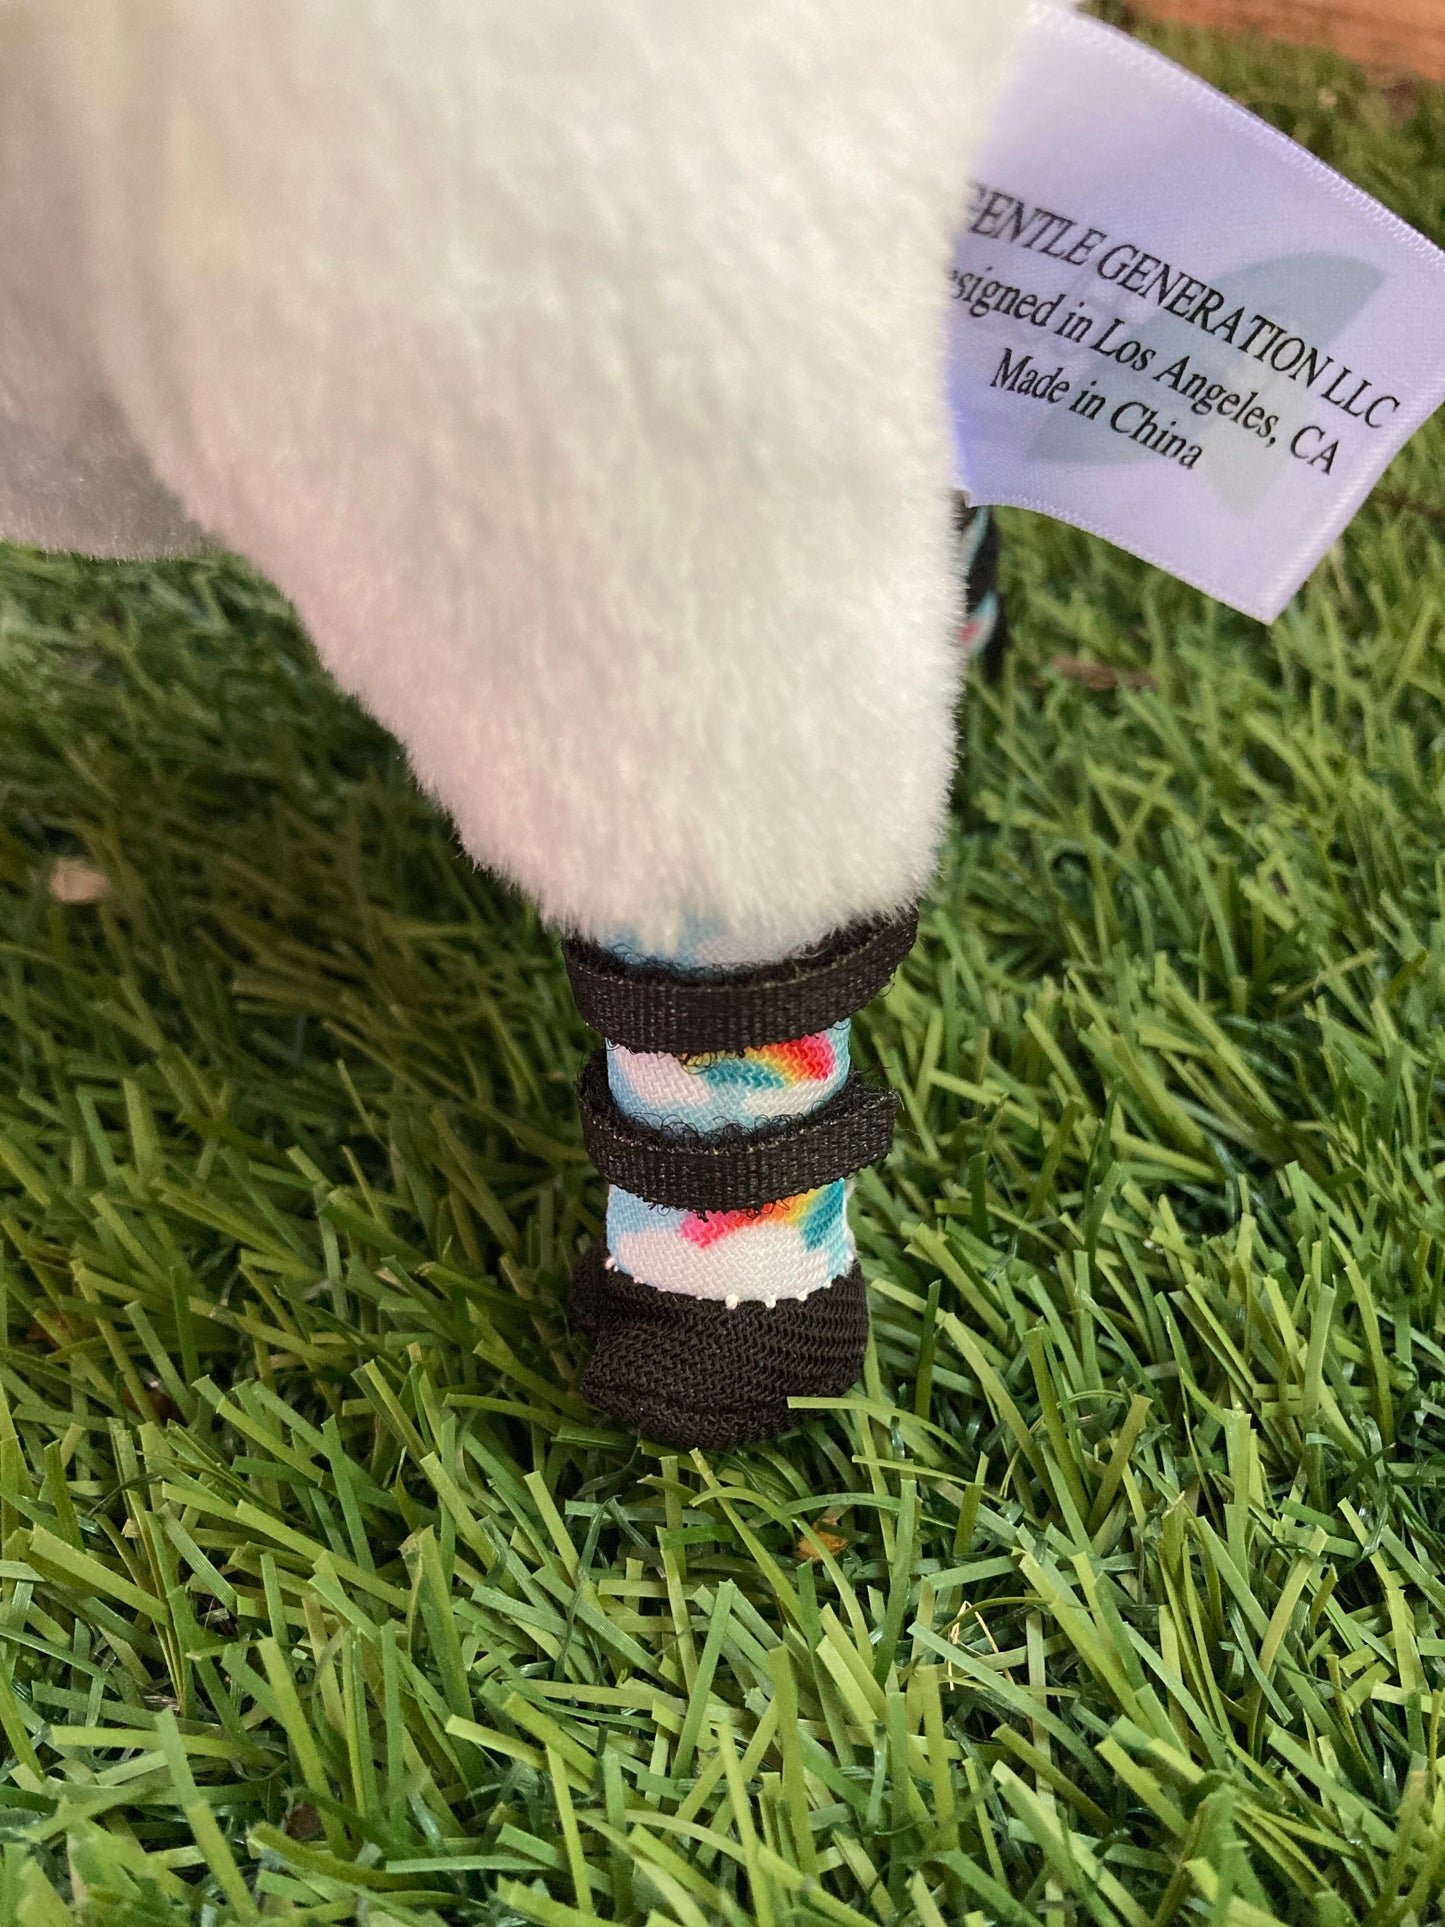 Espy - 8" White Goat Plush with Disability - Prosthetics on Back Feet Stuffed Farm Animal Toy - All Abilities Animal